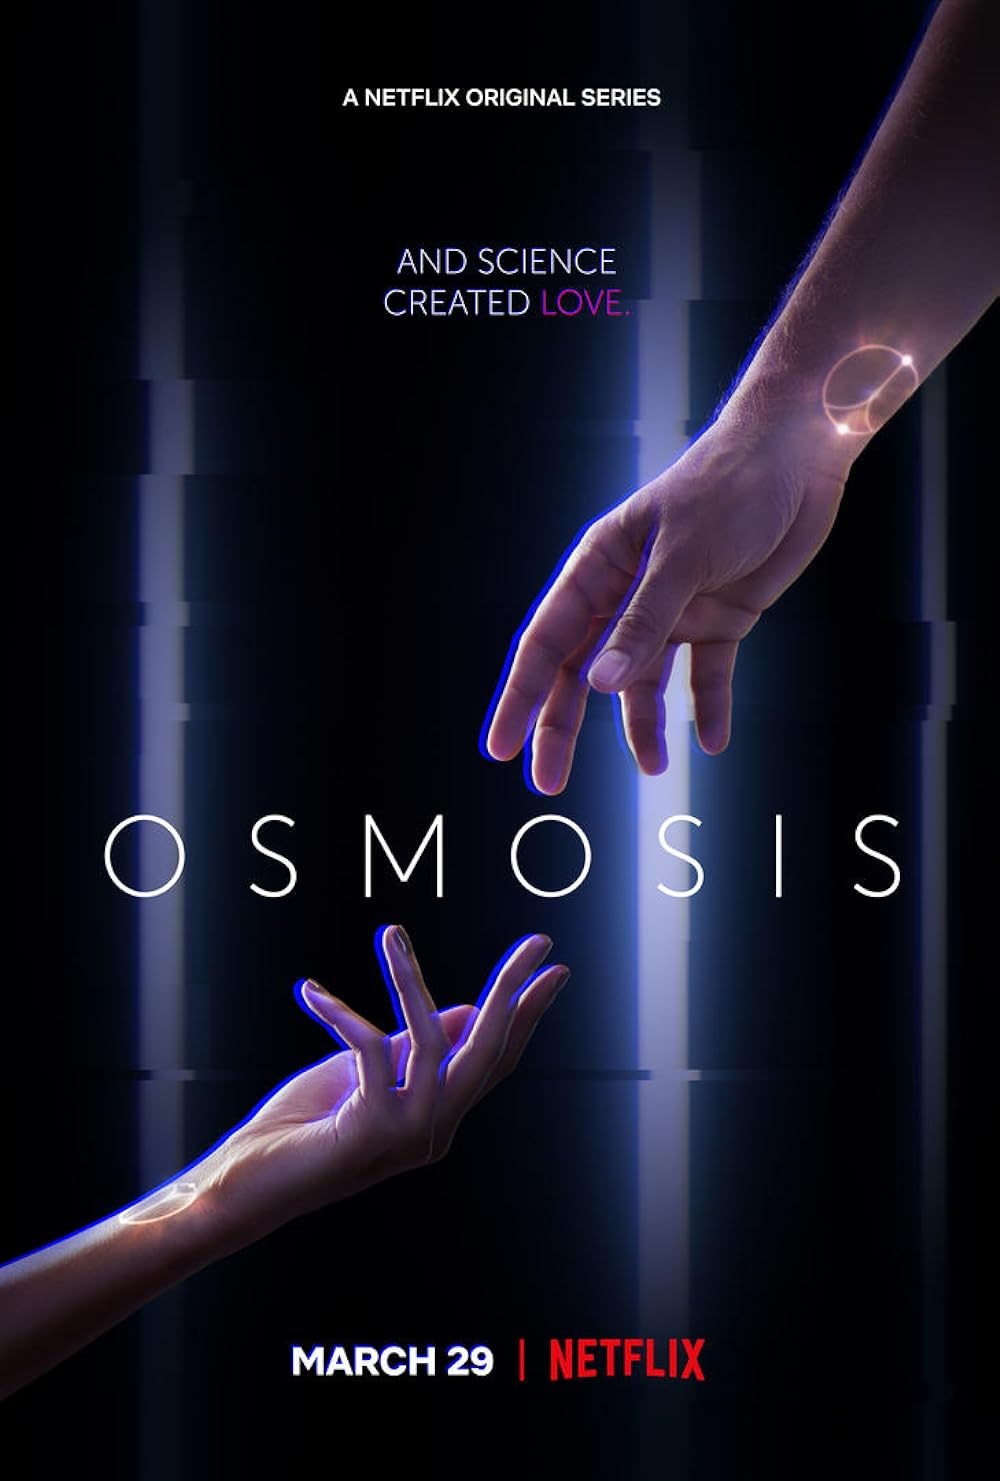 bilim kurgu yapımı Osmosis